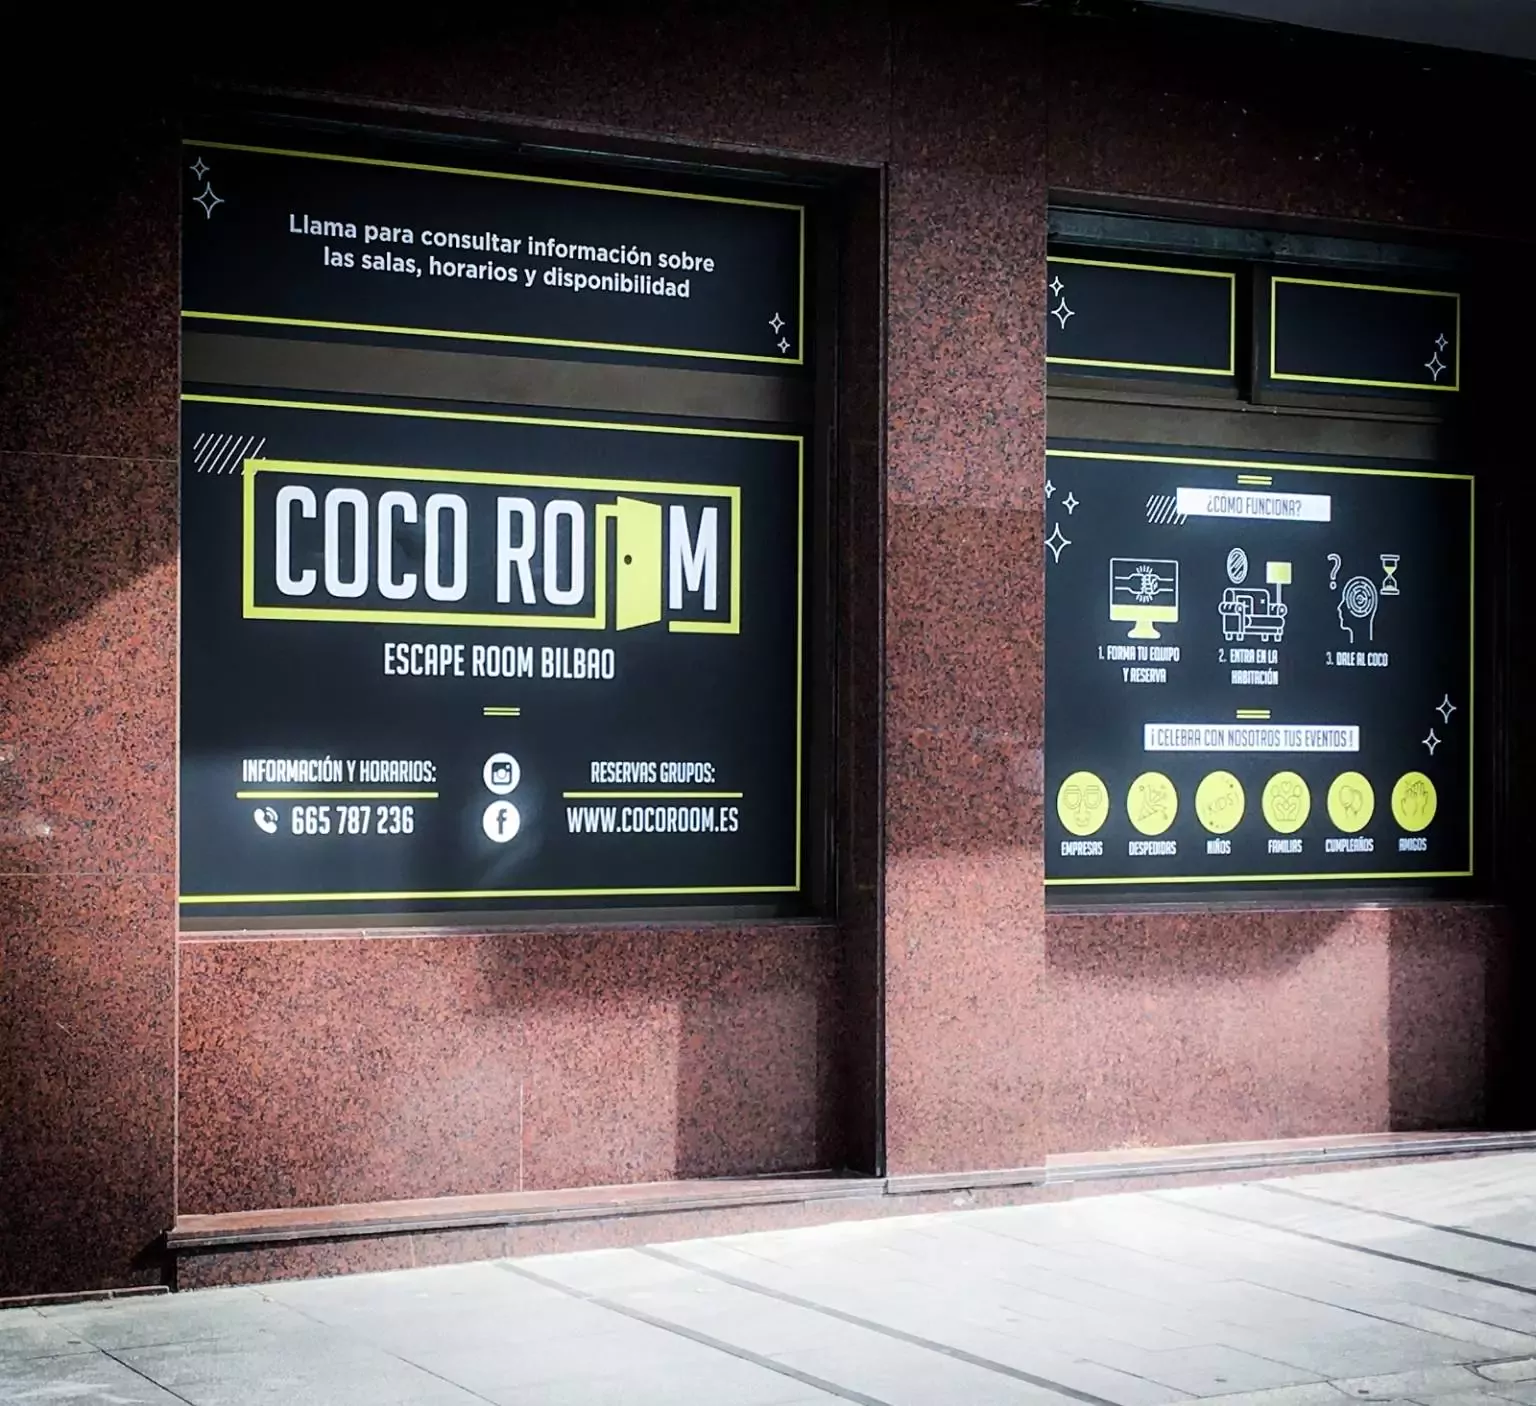 4. Escape Room  - Coco Room Bilbao